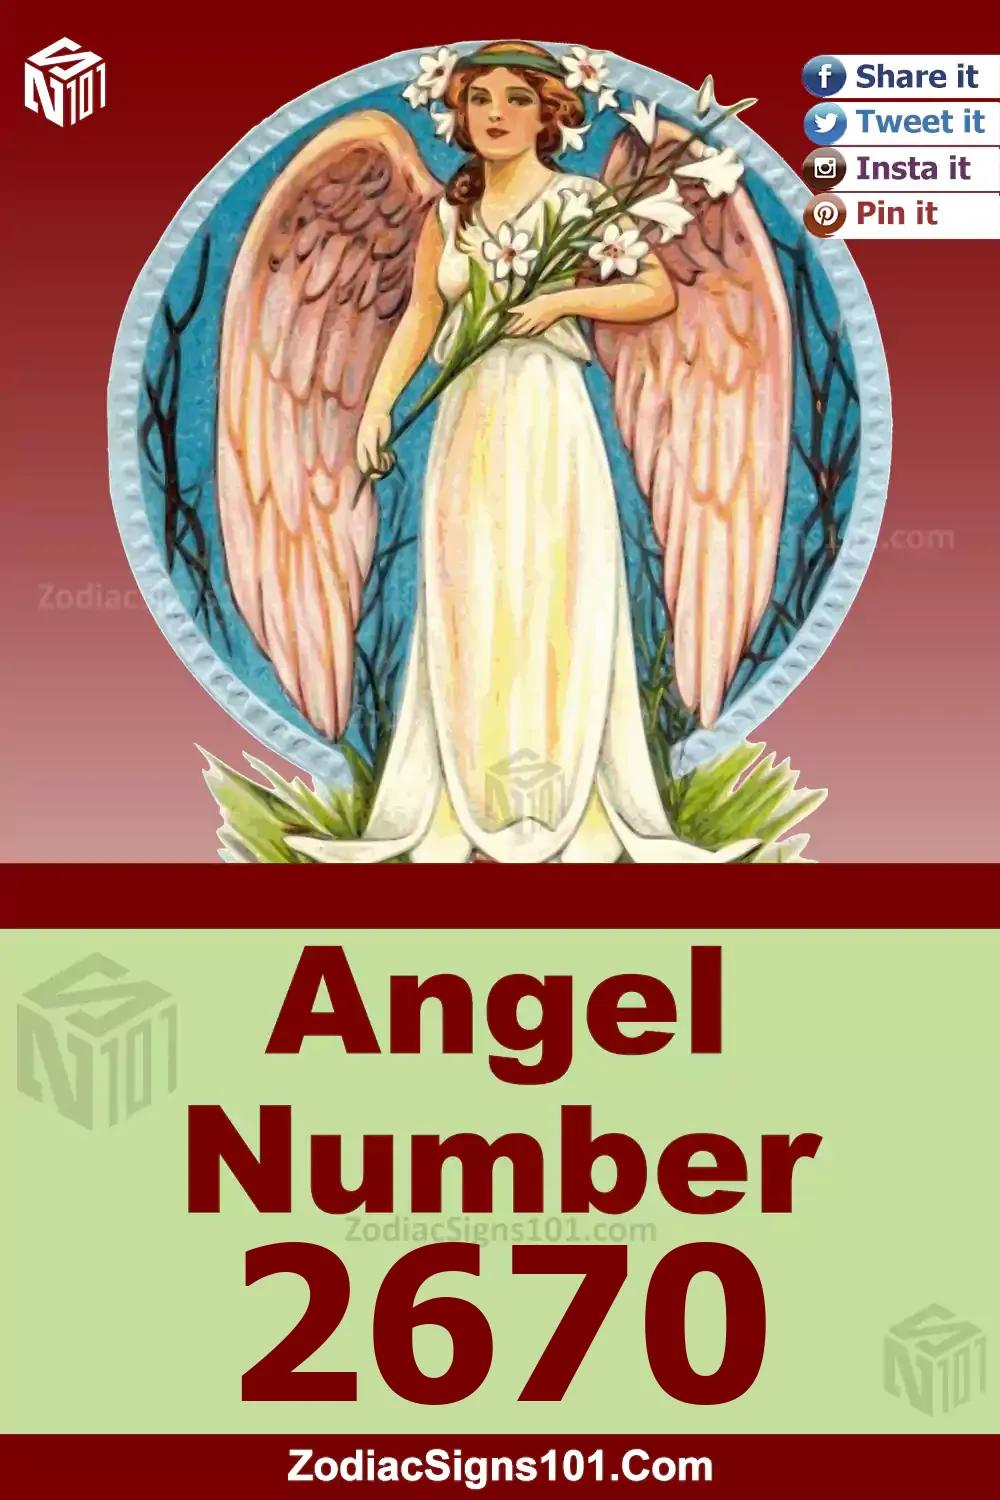 2670-Angel-Number-Meaning.jpg